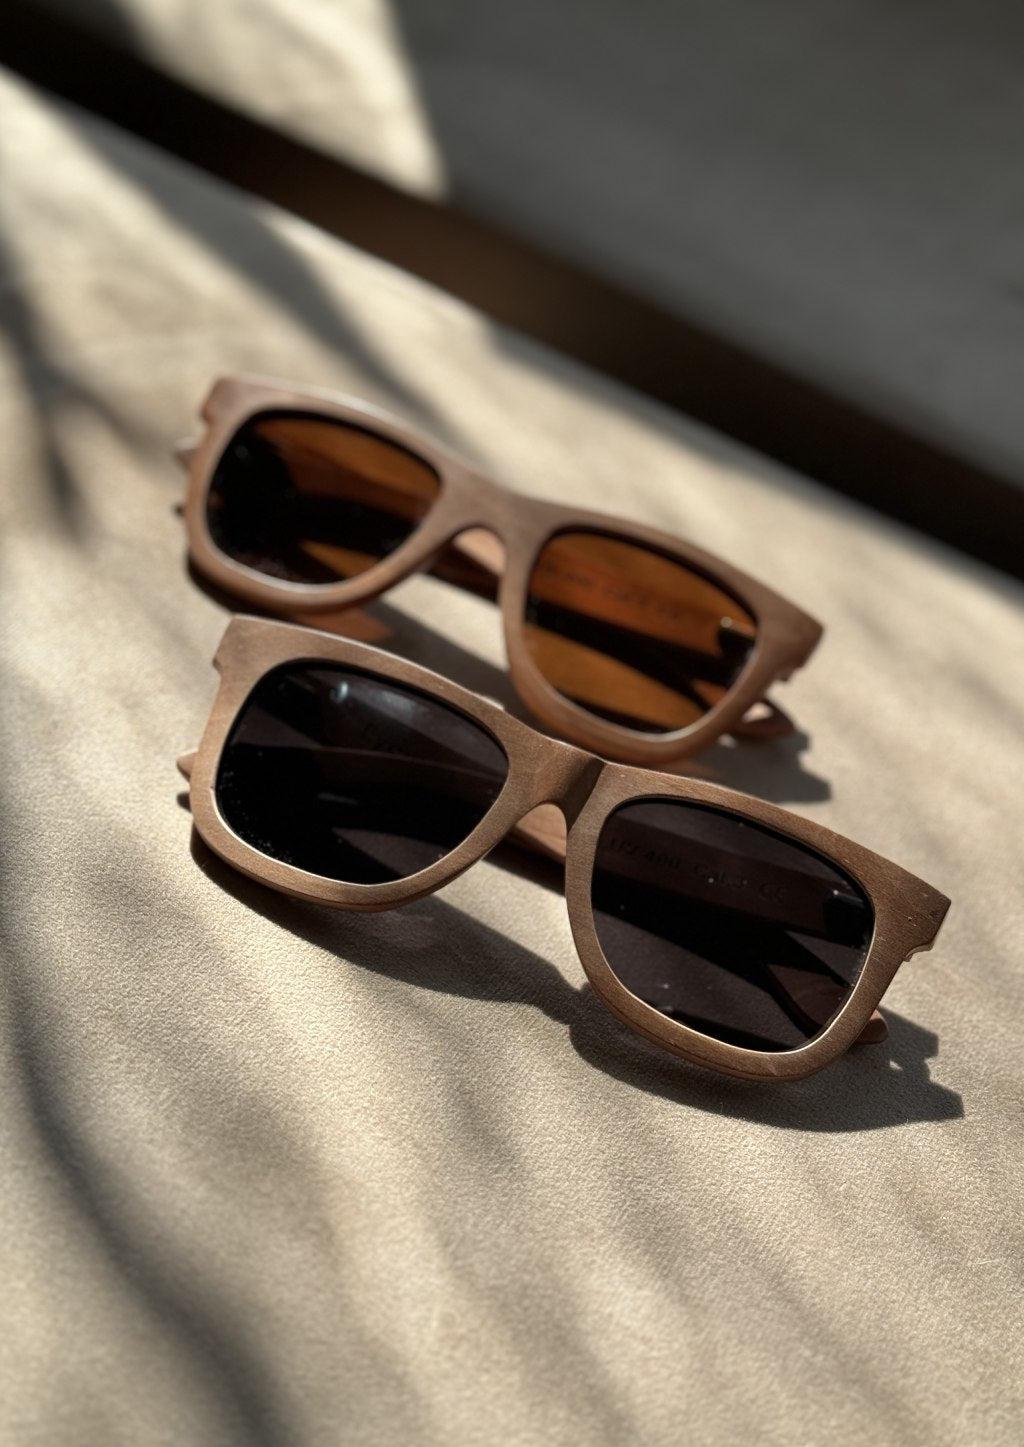 Rare Zerpico Bundle - 4 Pair of very rare sunglasses